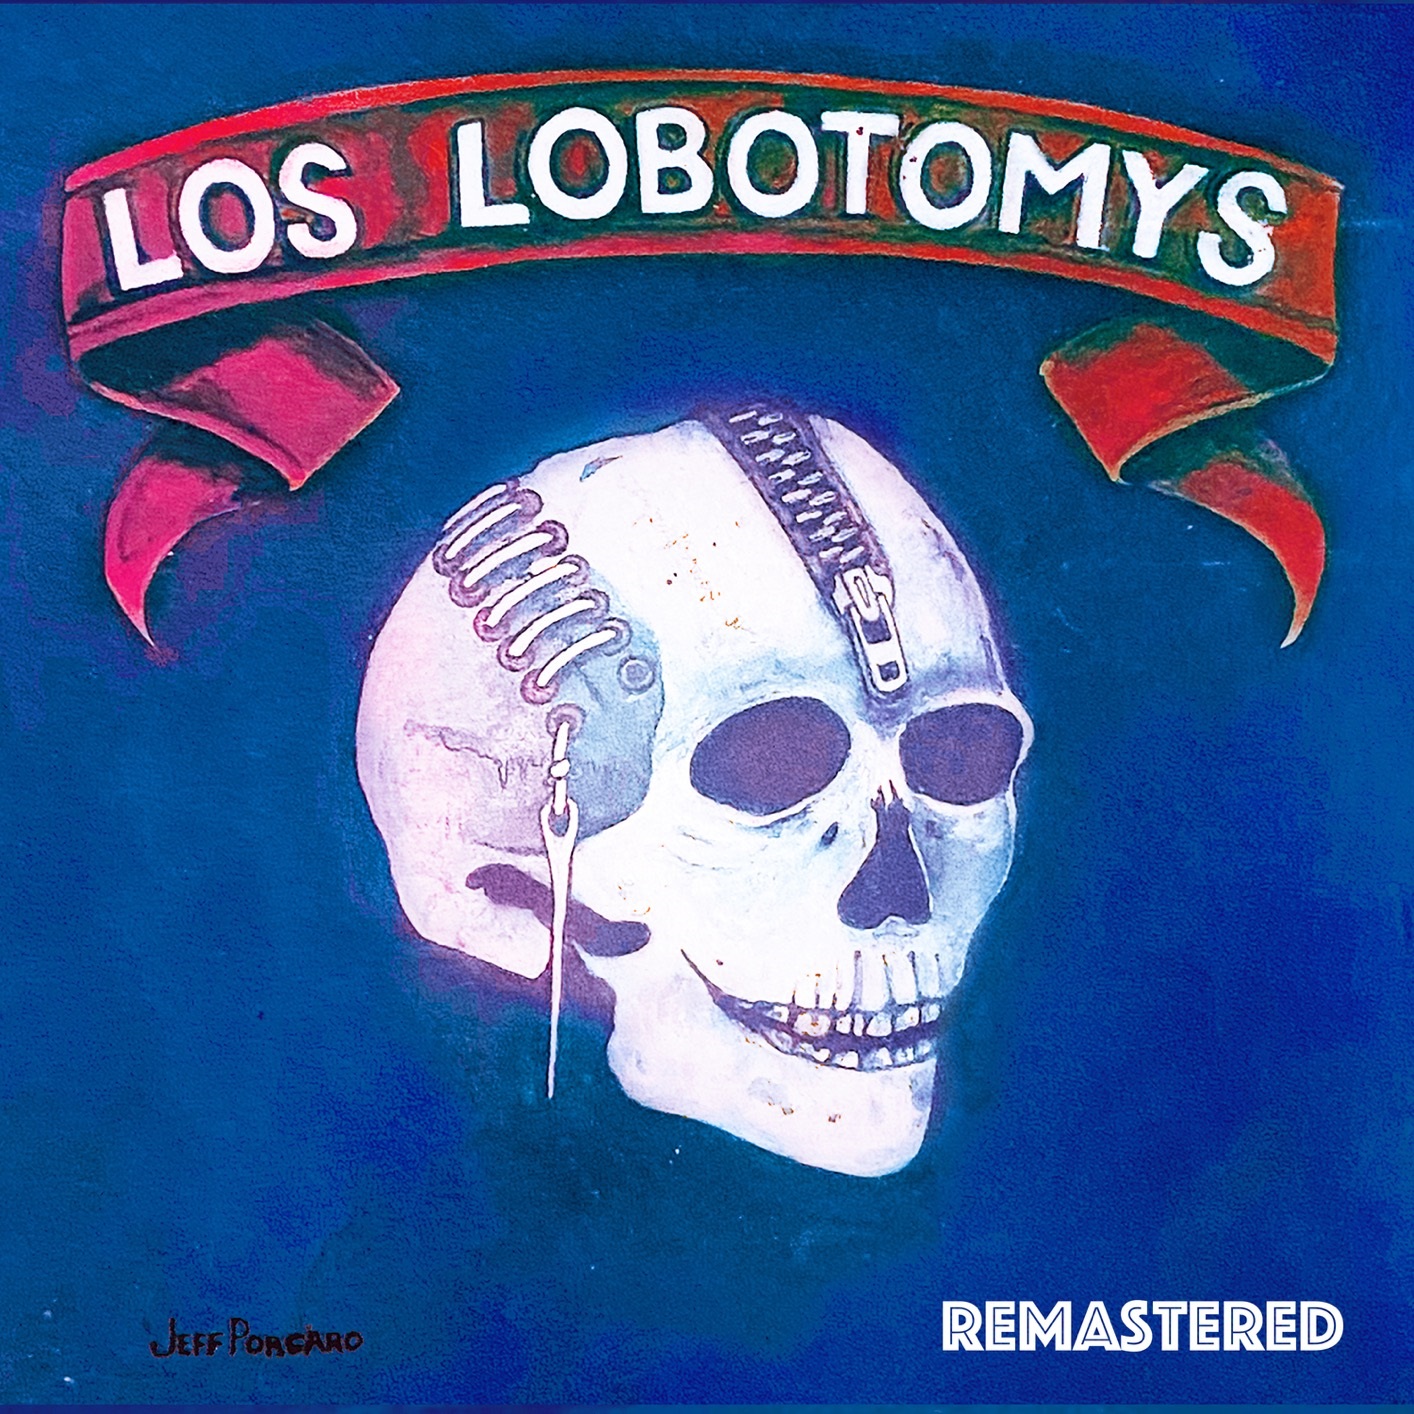 Los Lobotomys & David Garfield – Los Lobotomys (Remastered) (1989/2020) [FLAC 24bit/44,1kHz]